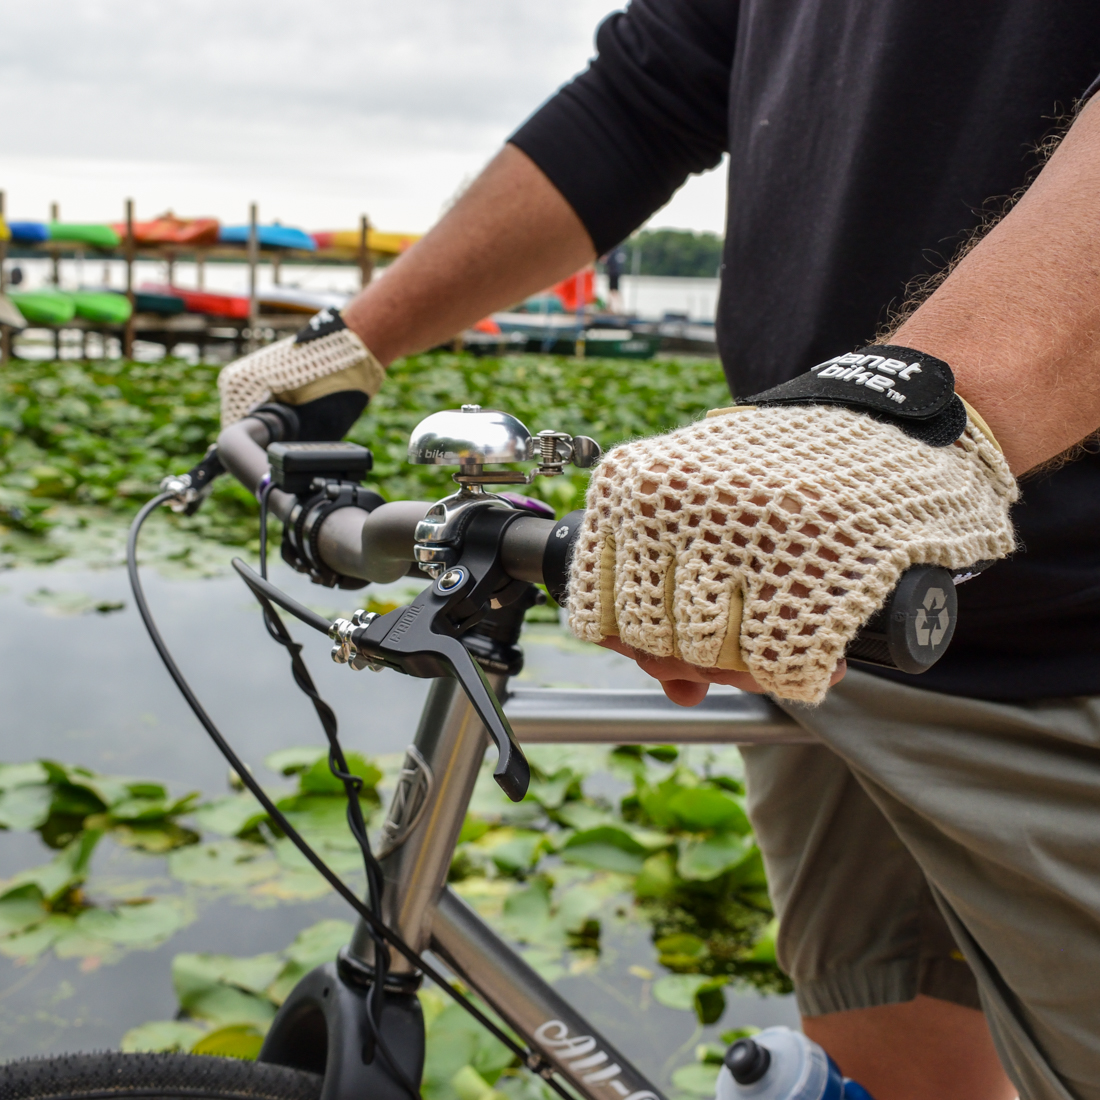 Aero Tech Gel Padded Leather Cotton Crochet Fingerless Cycling Gloves